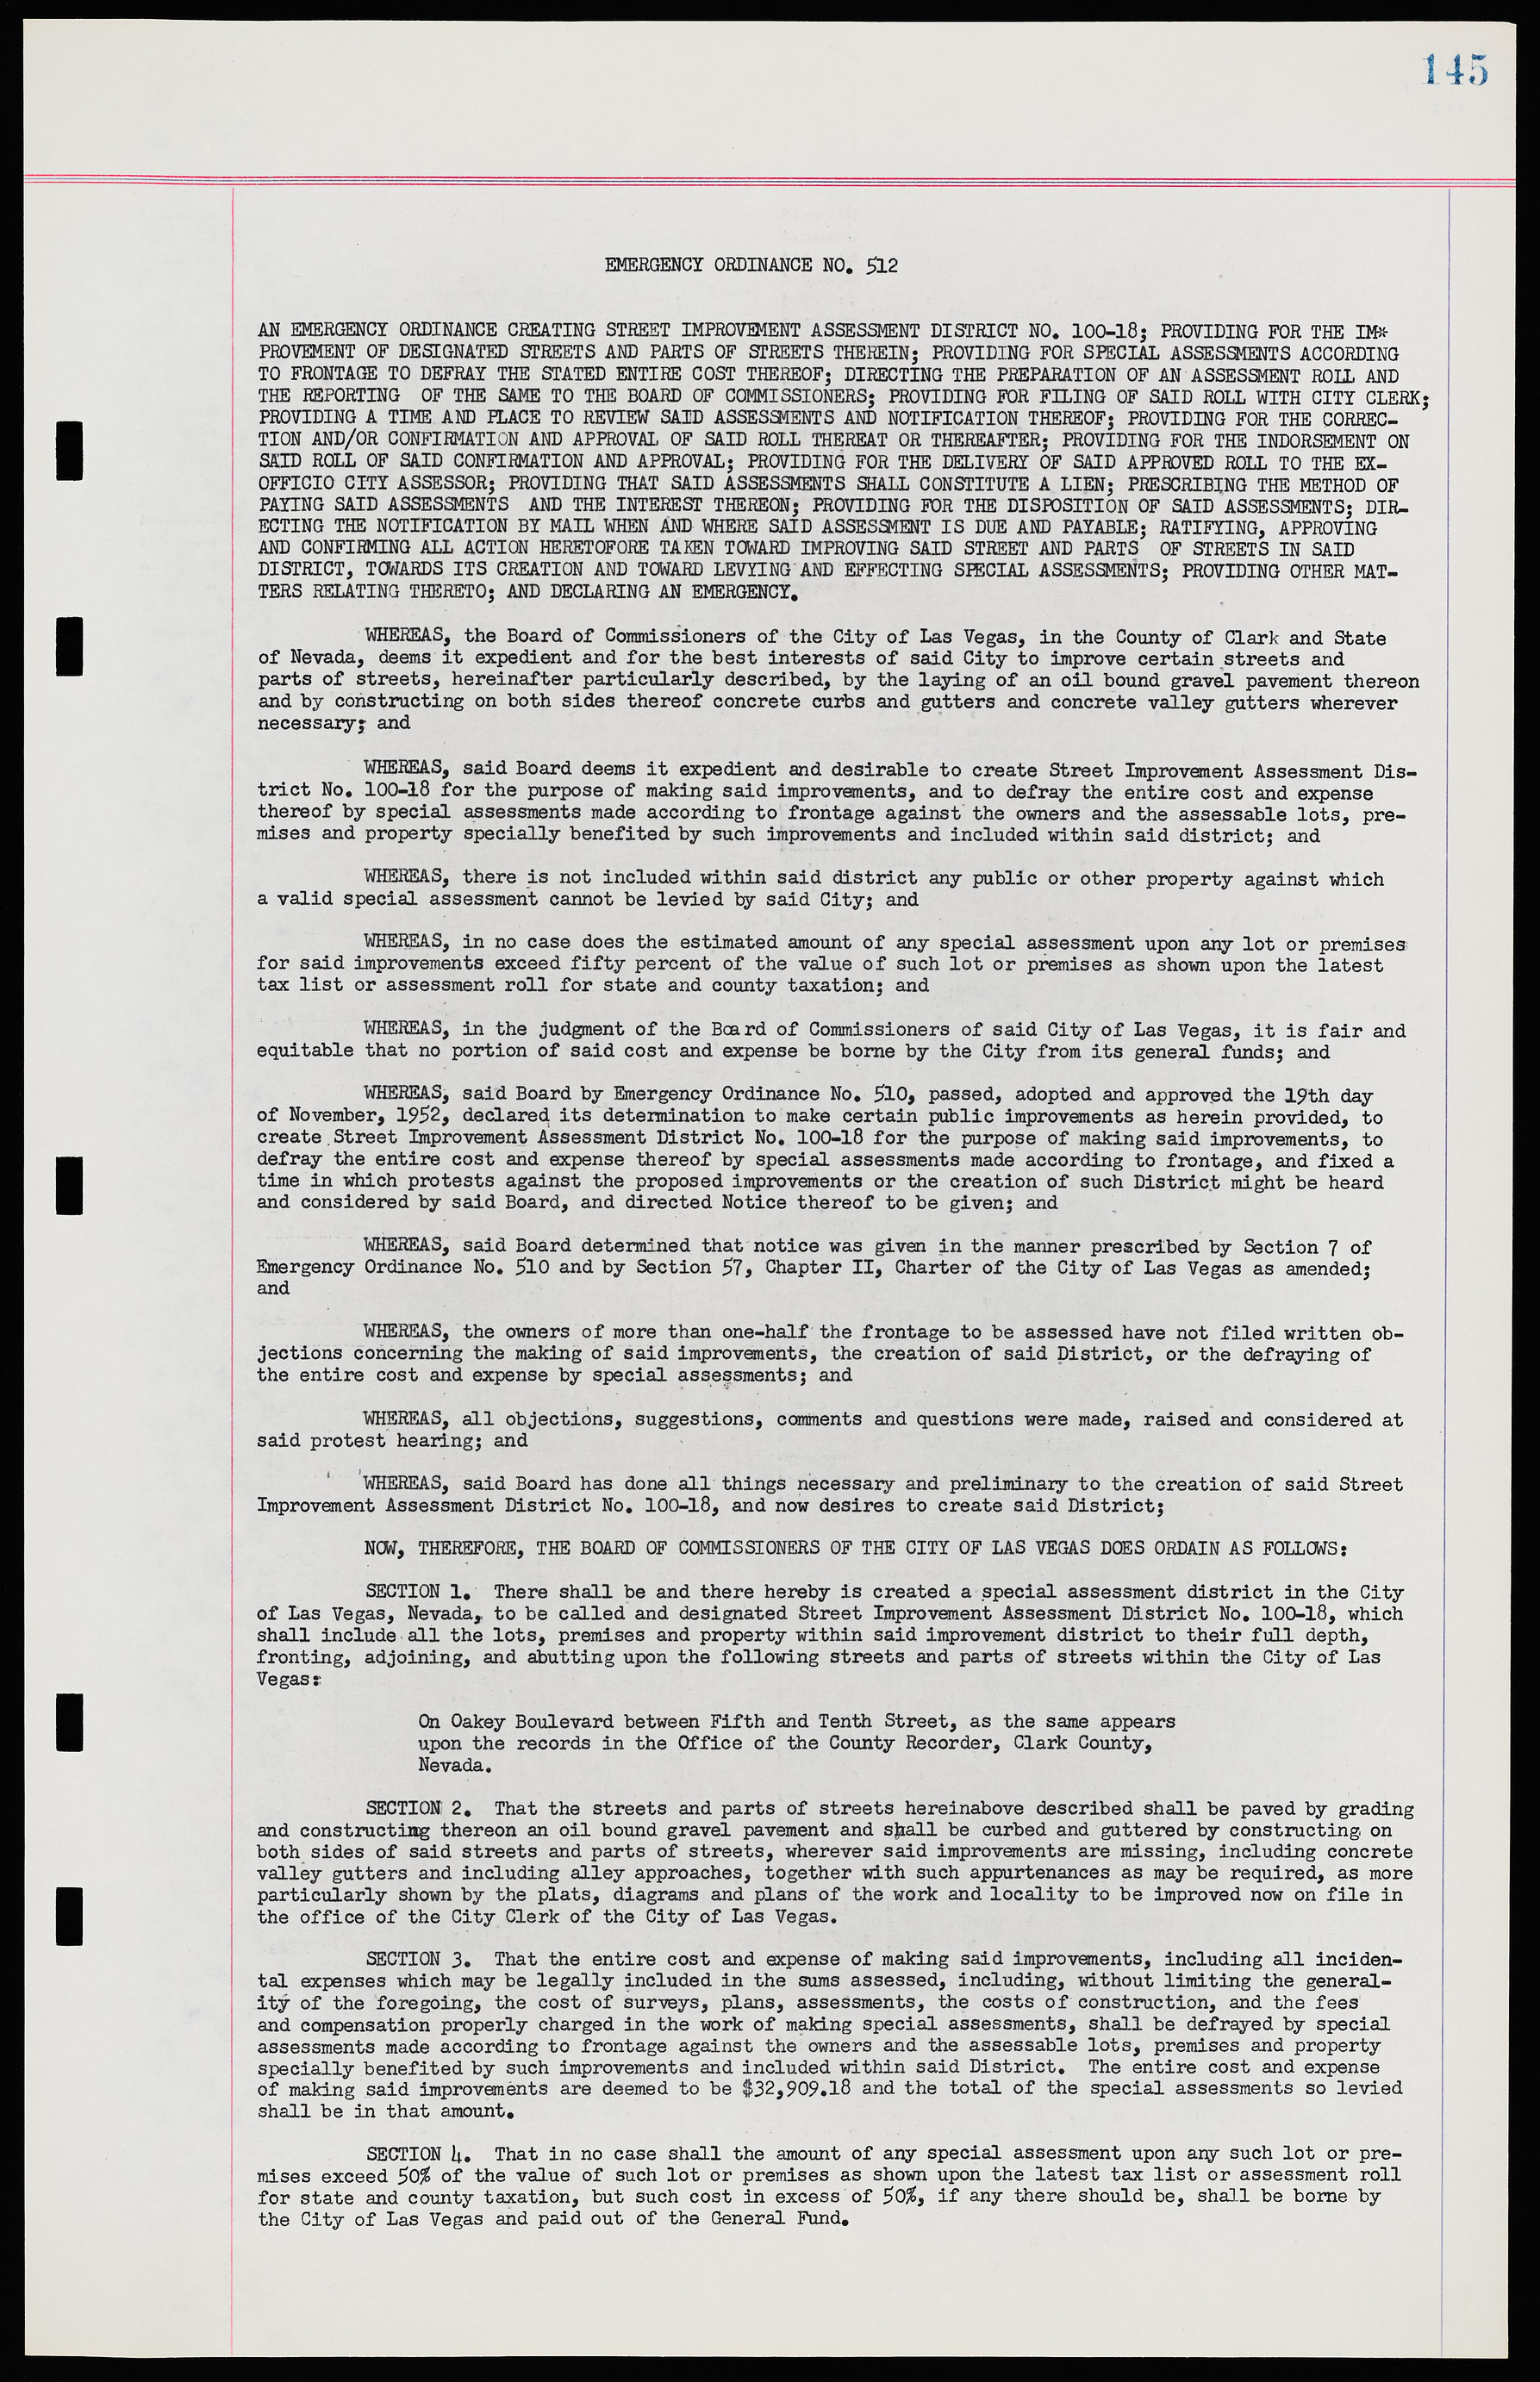 Las Vegas City Ordinances, November 13, 1950 to August 6, 1958, lvc000015-153